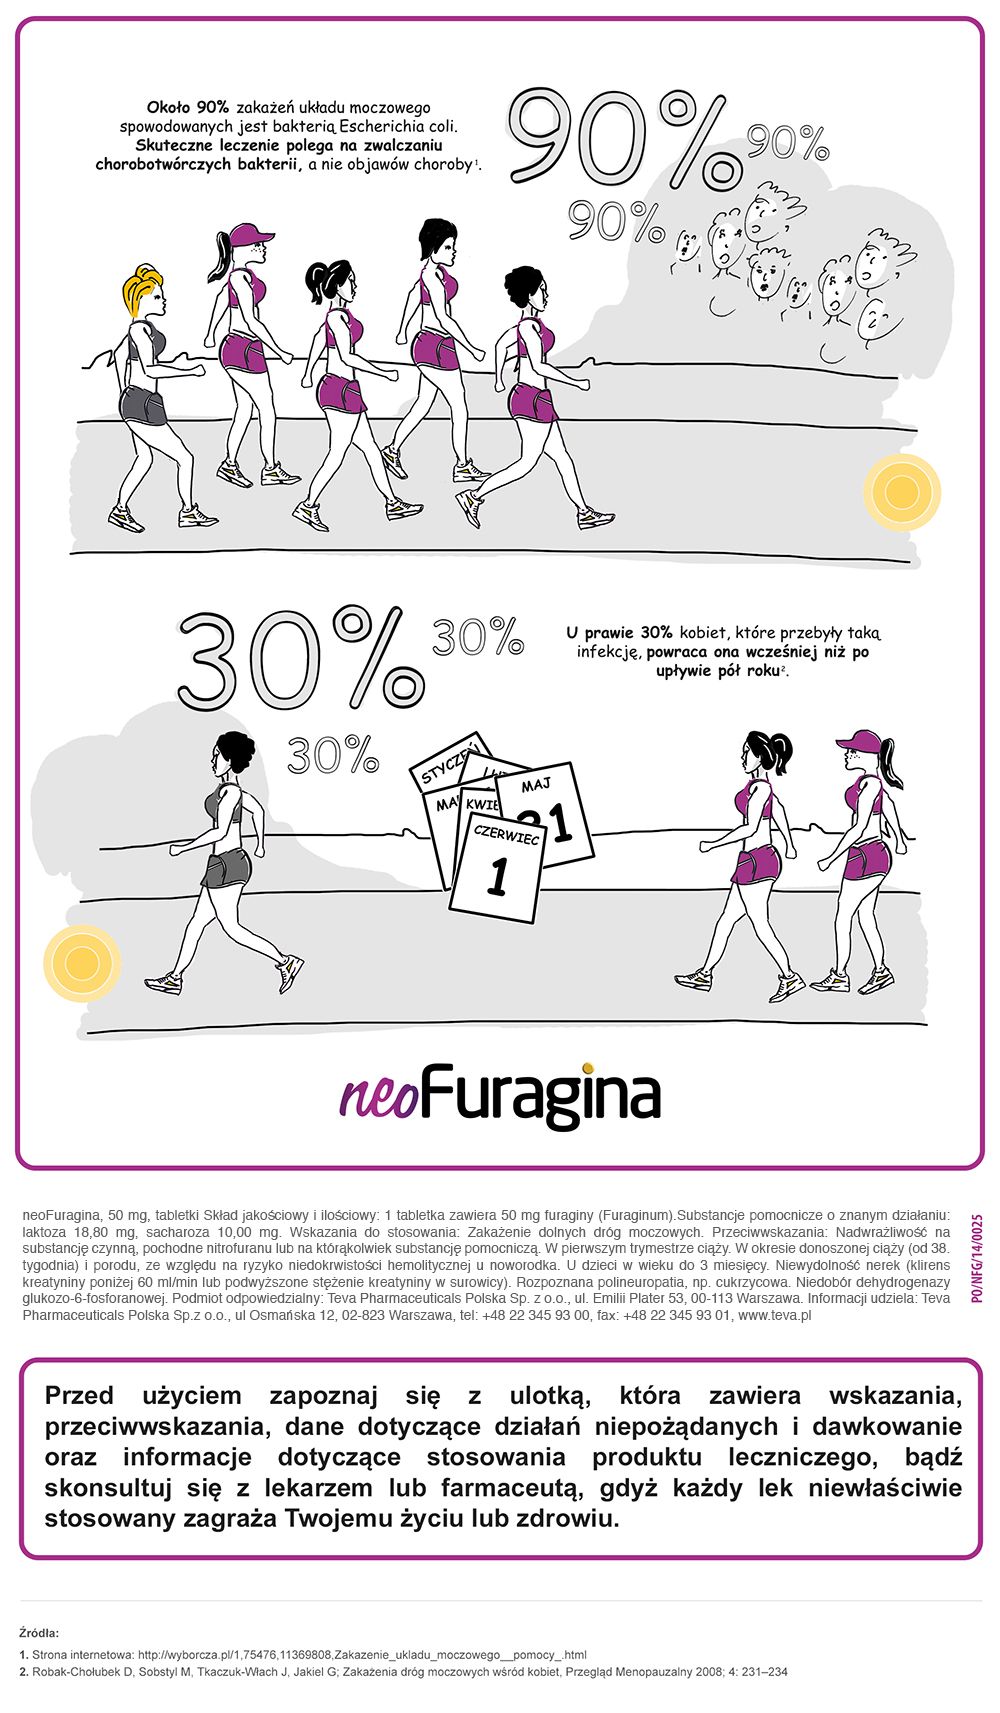 Teva_neoFuragina_infografika